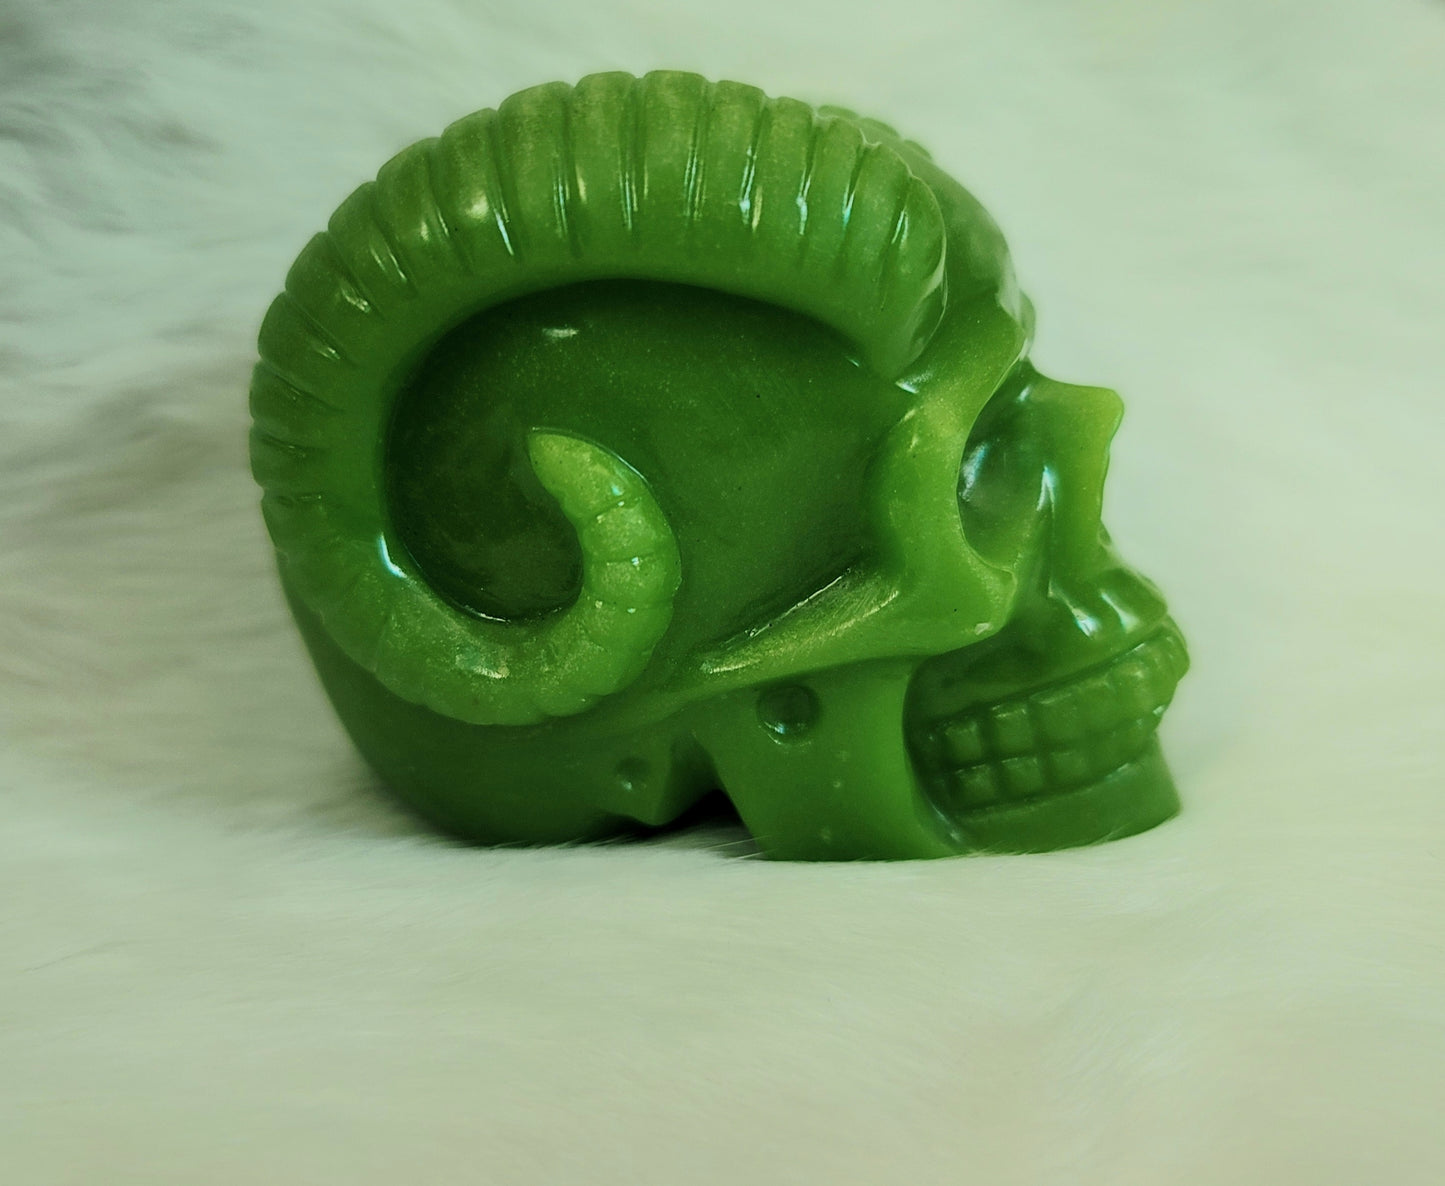 Green Glowstone Skull